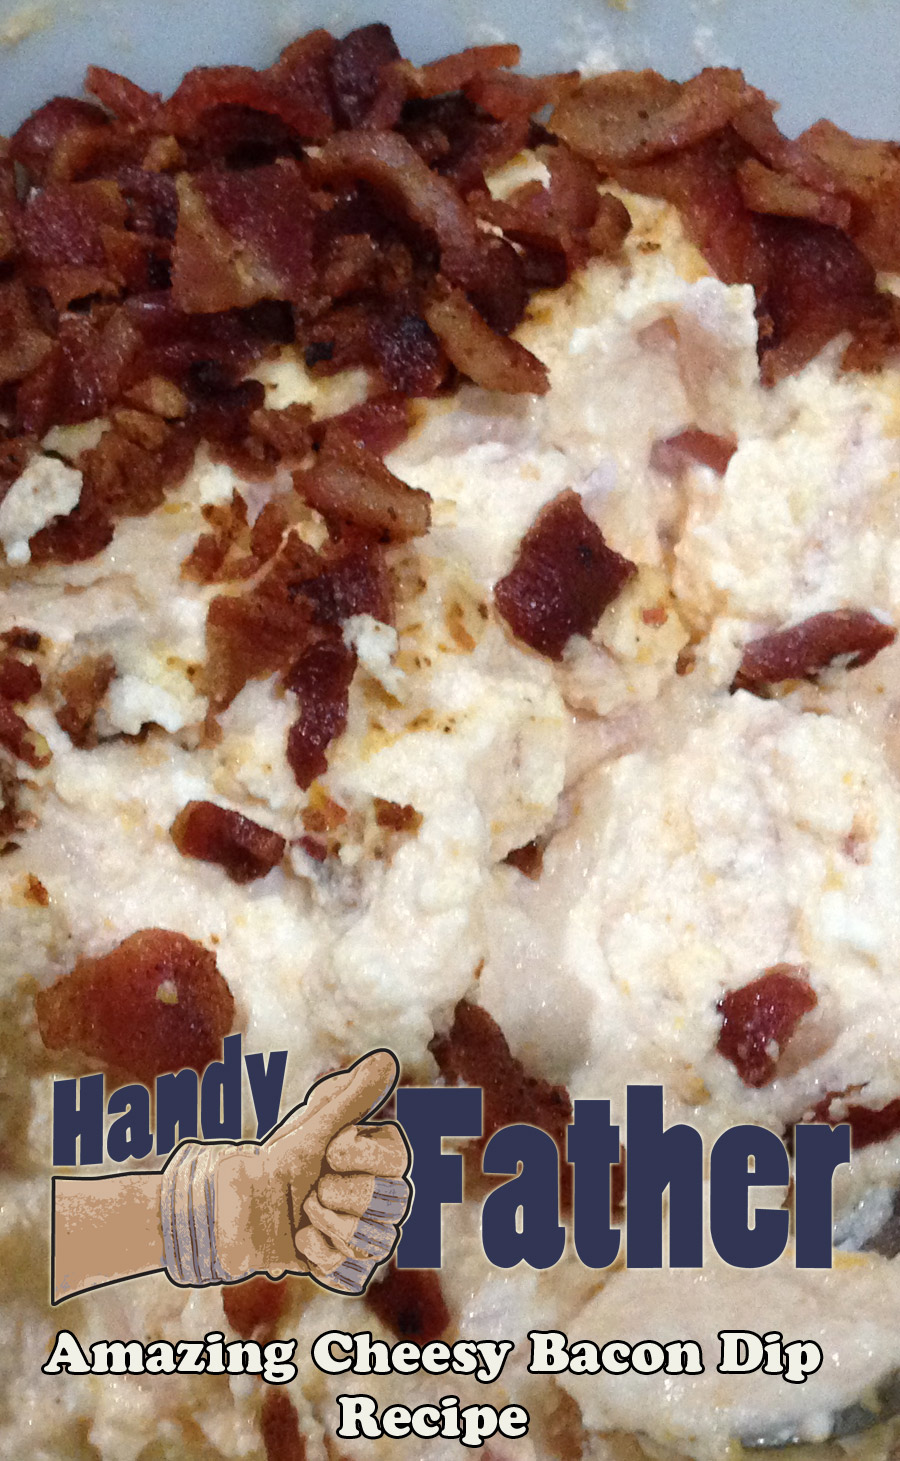 Amazing Cheesy Bacon Dip Recipe - Handy Father, LLC